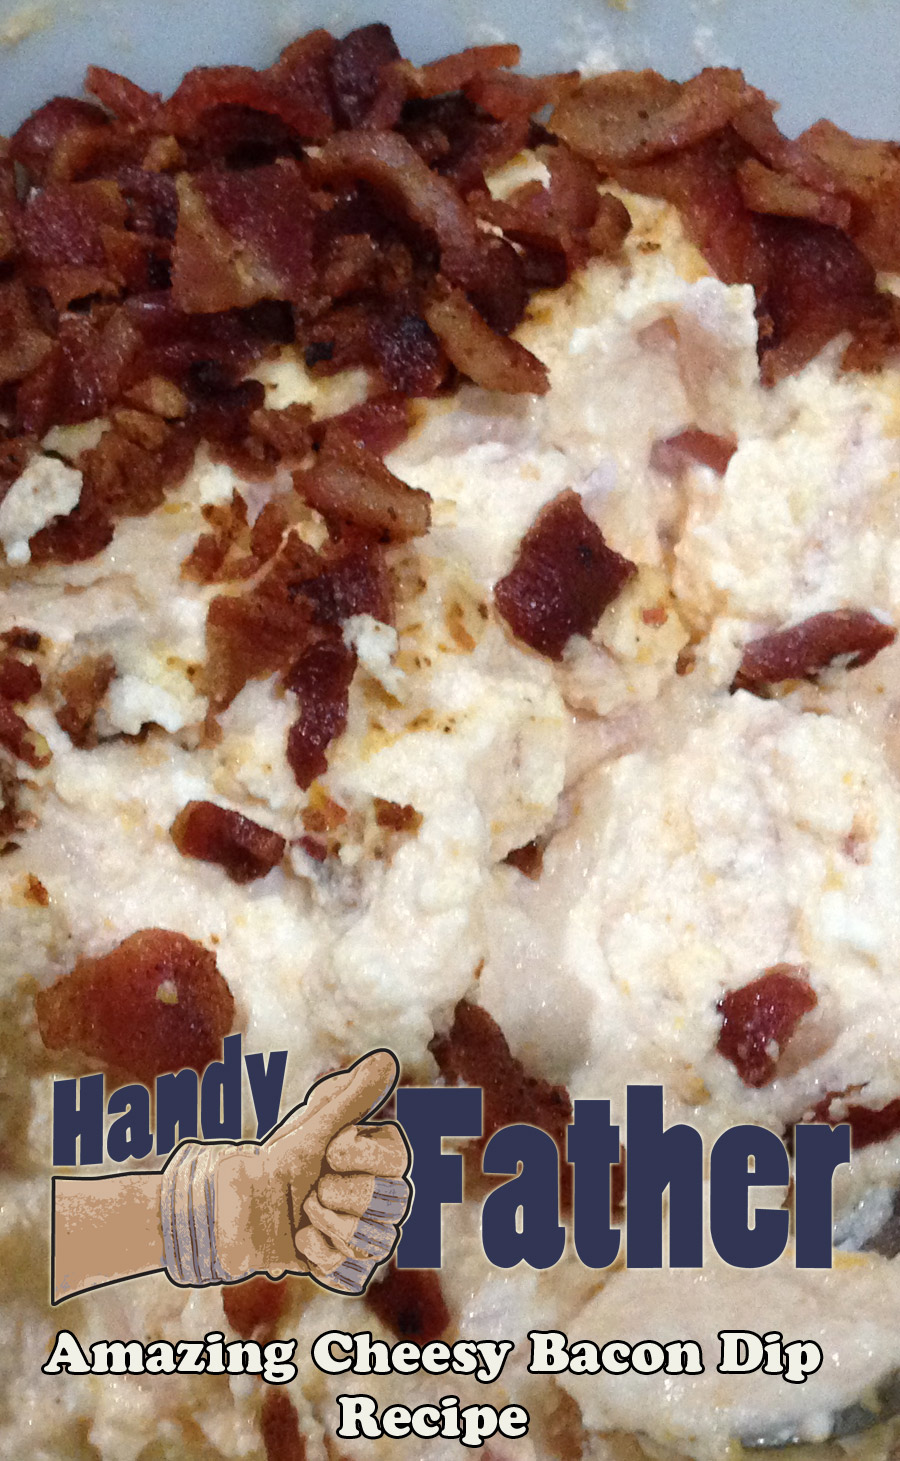 Amazing Cheesy Bacon Dip Recipe - Handy Father, LLC